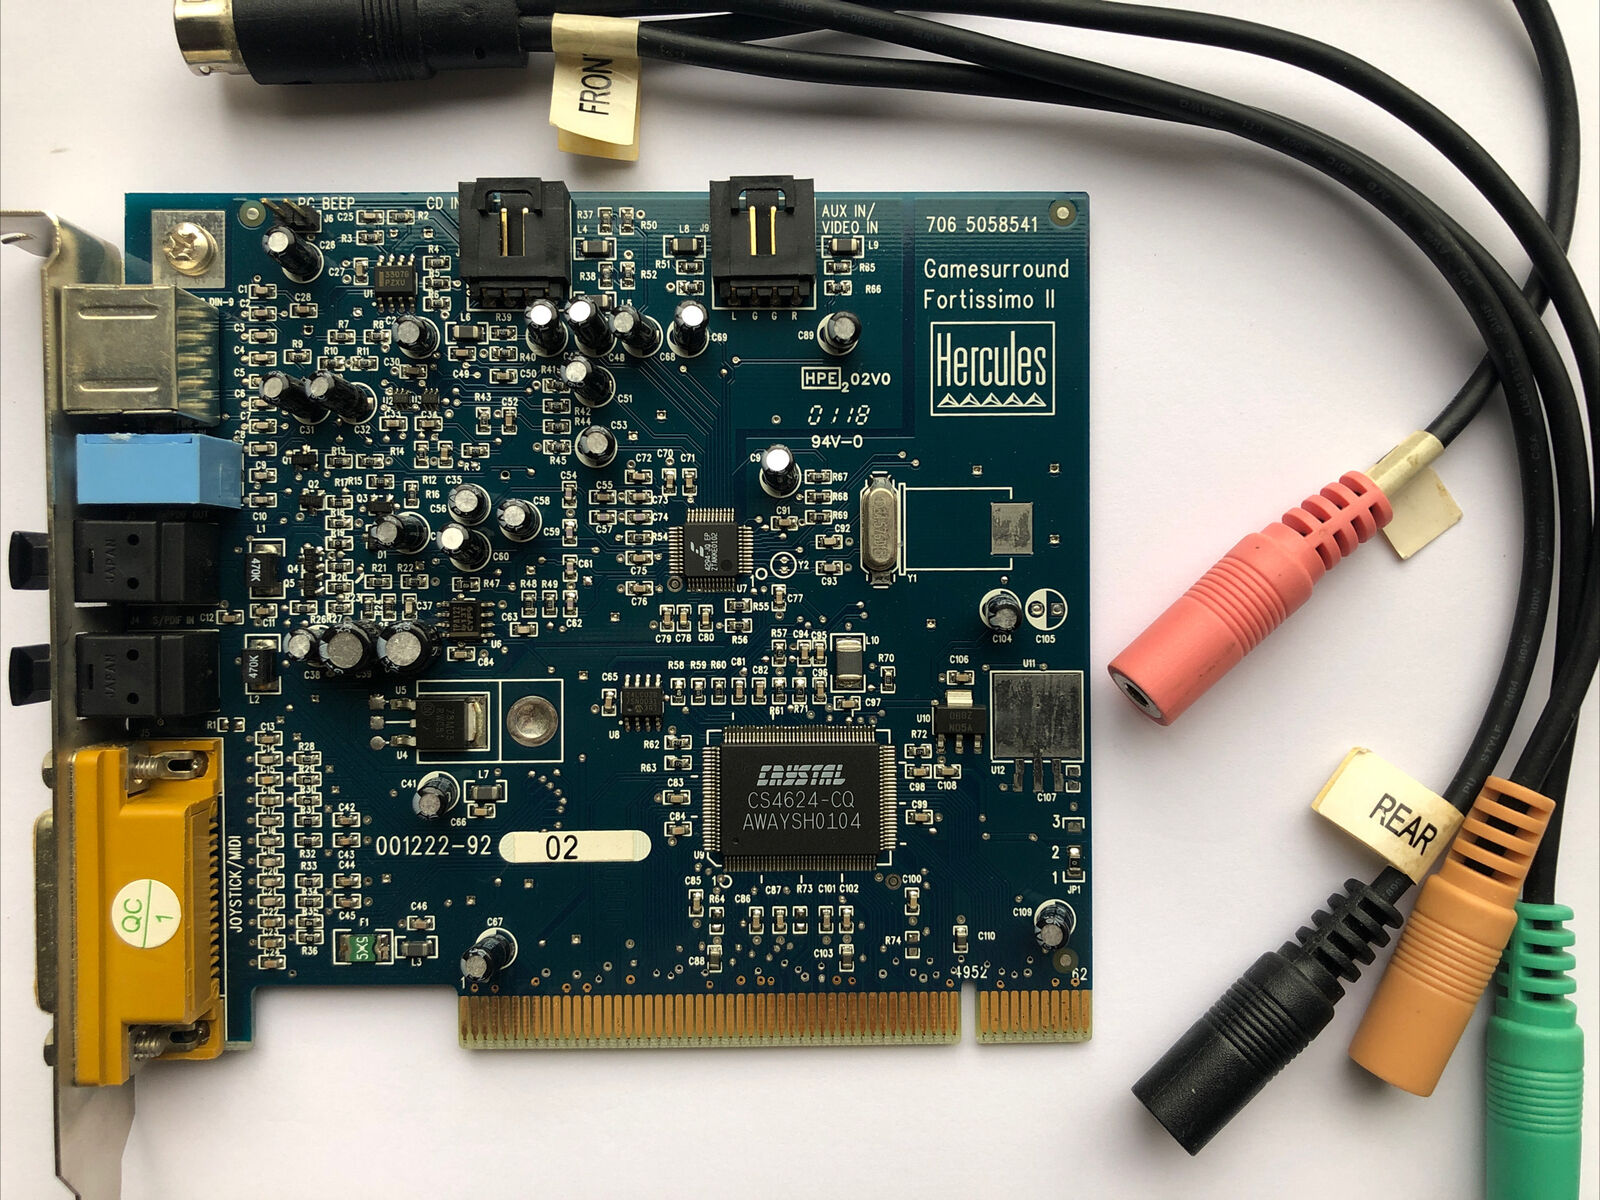 Hercules 5058541 Gamesurround Fortissimo II Digital PCI Audio Sound-Card